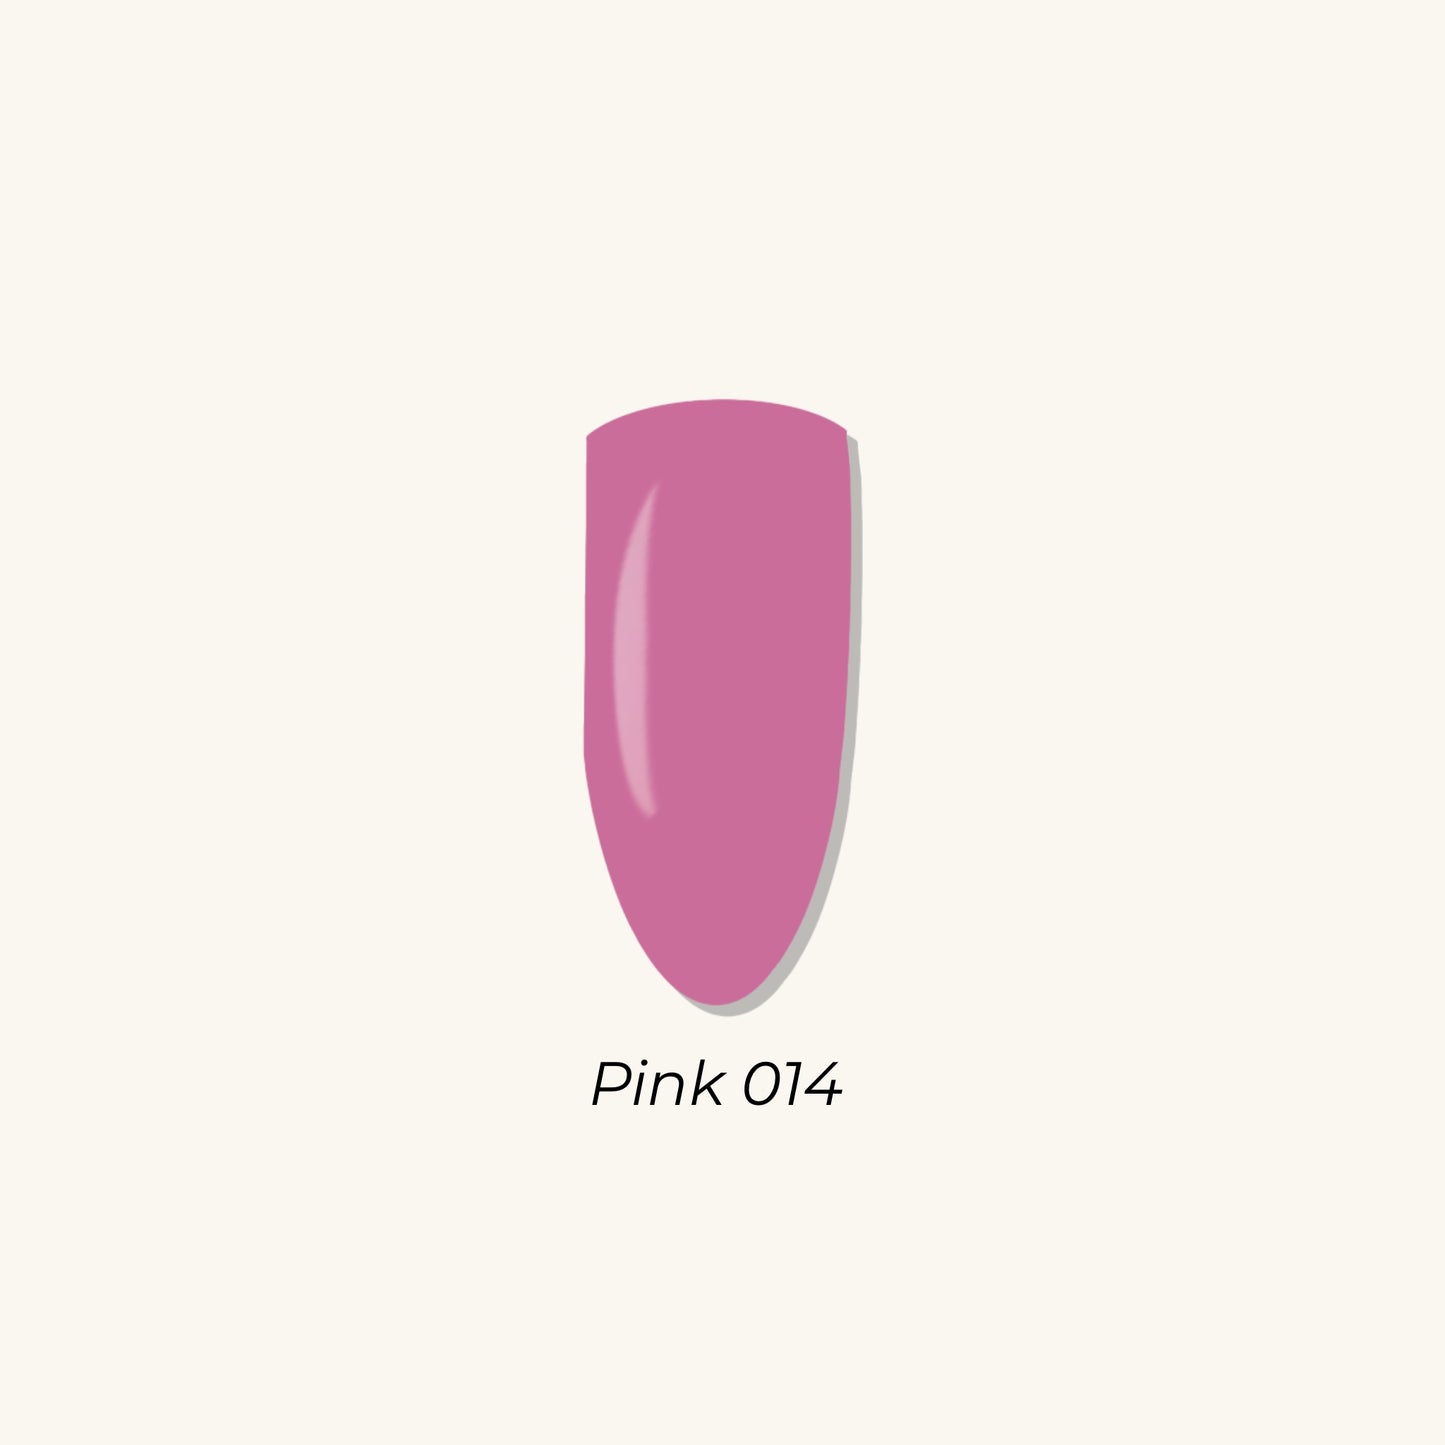 Pink 014